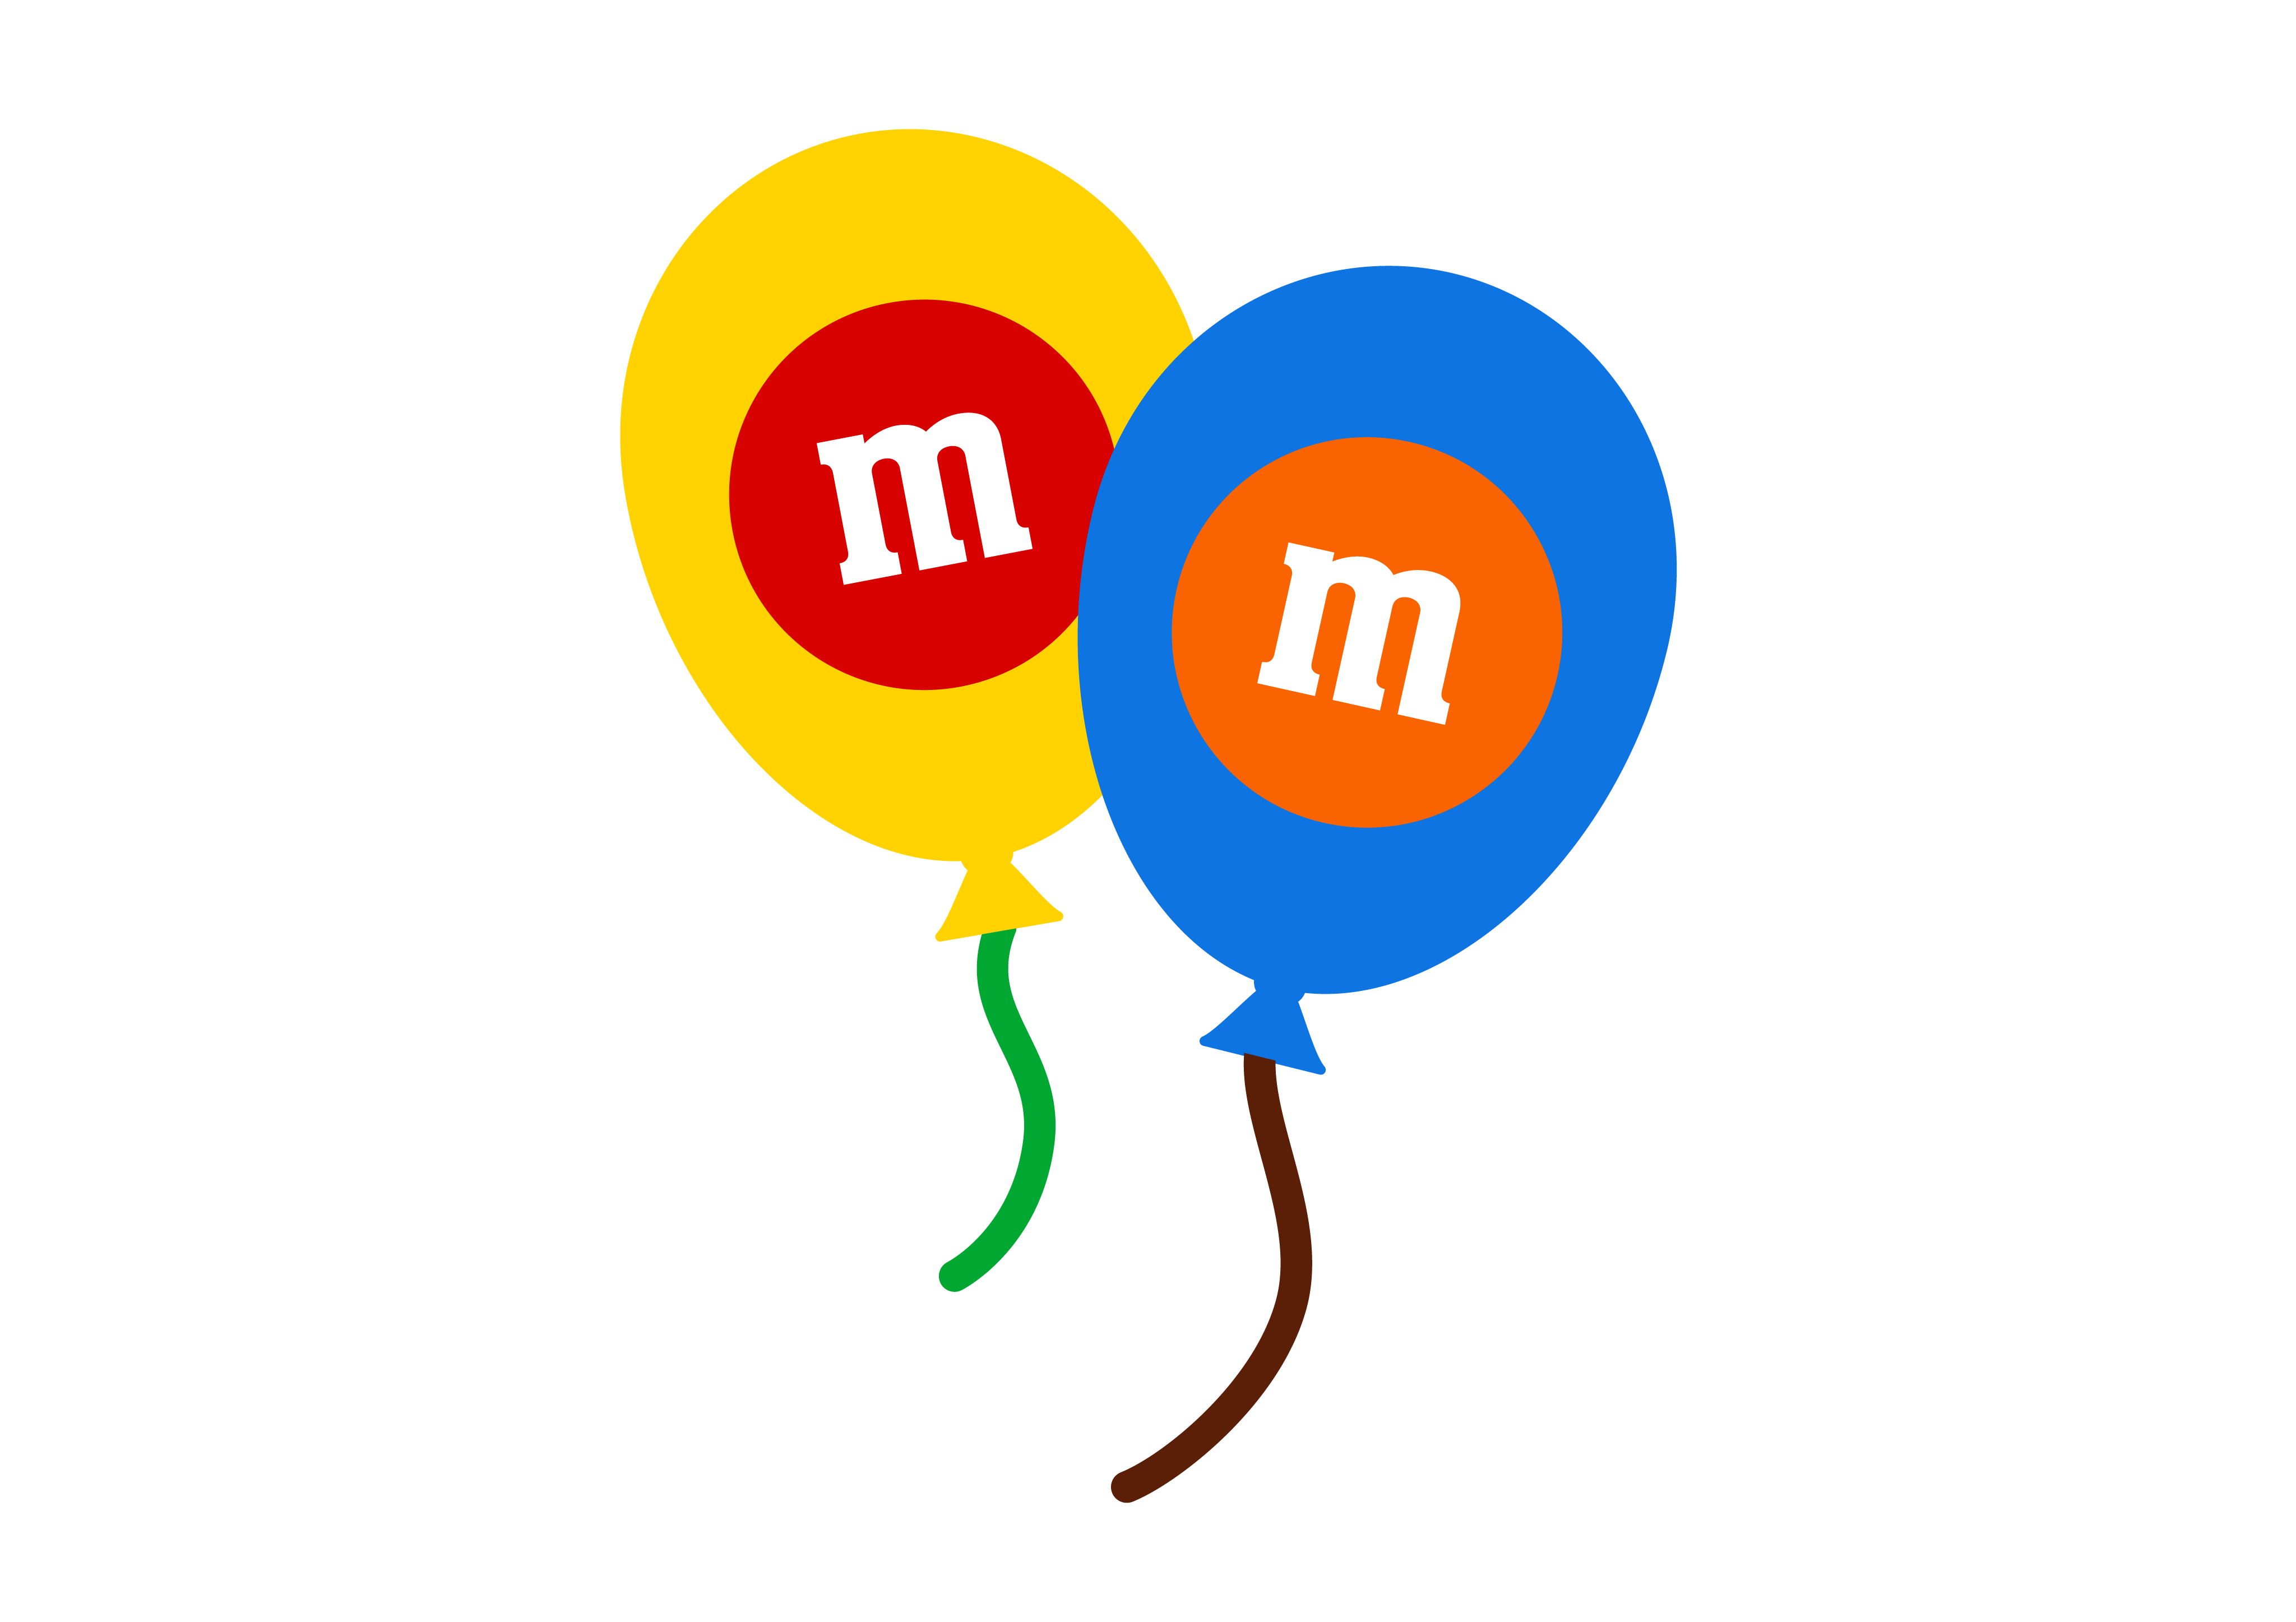 Buy M&ms Peanut Gift Box Present Hamper Birthday / Christmas Gift Online in  India 